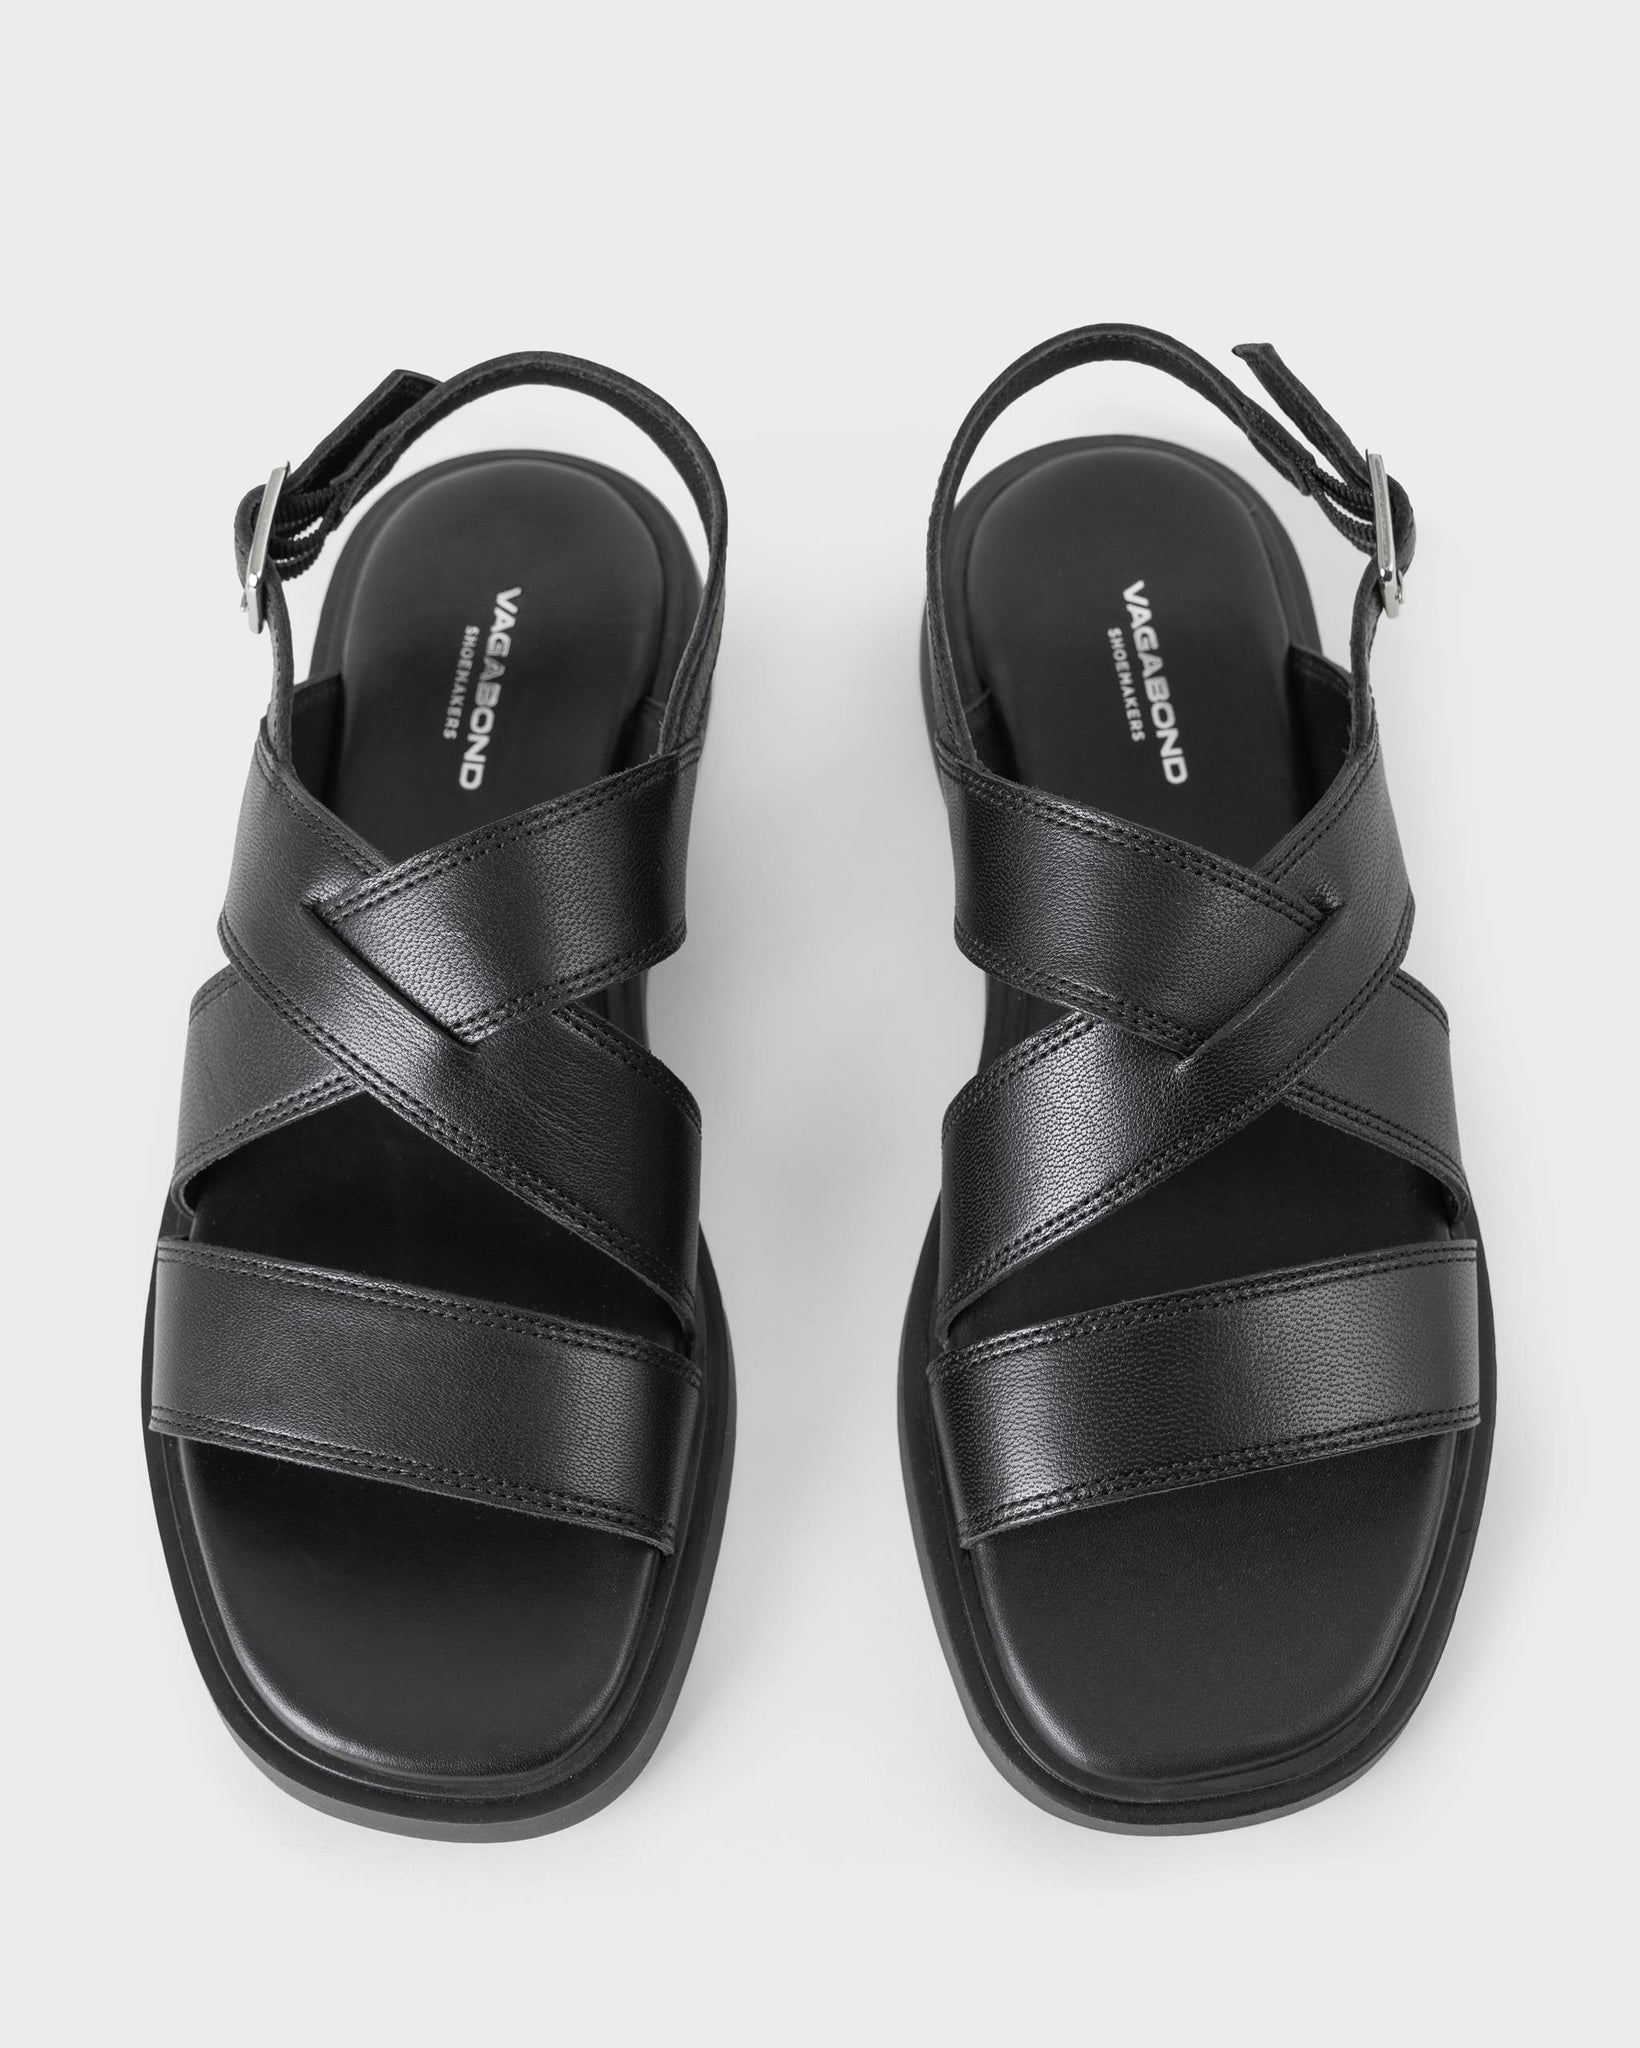 Connie (5757-401-20) Sandals - Black Leather